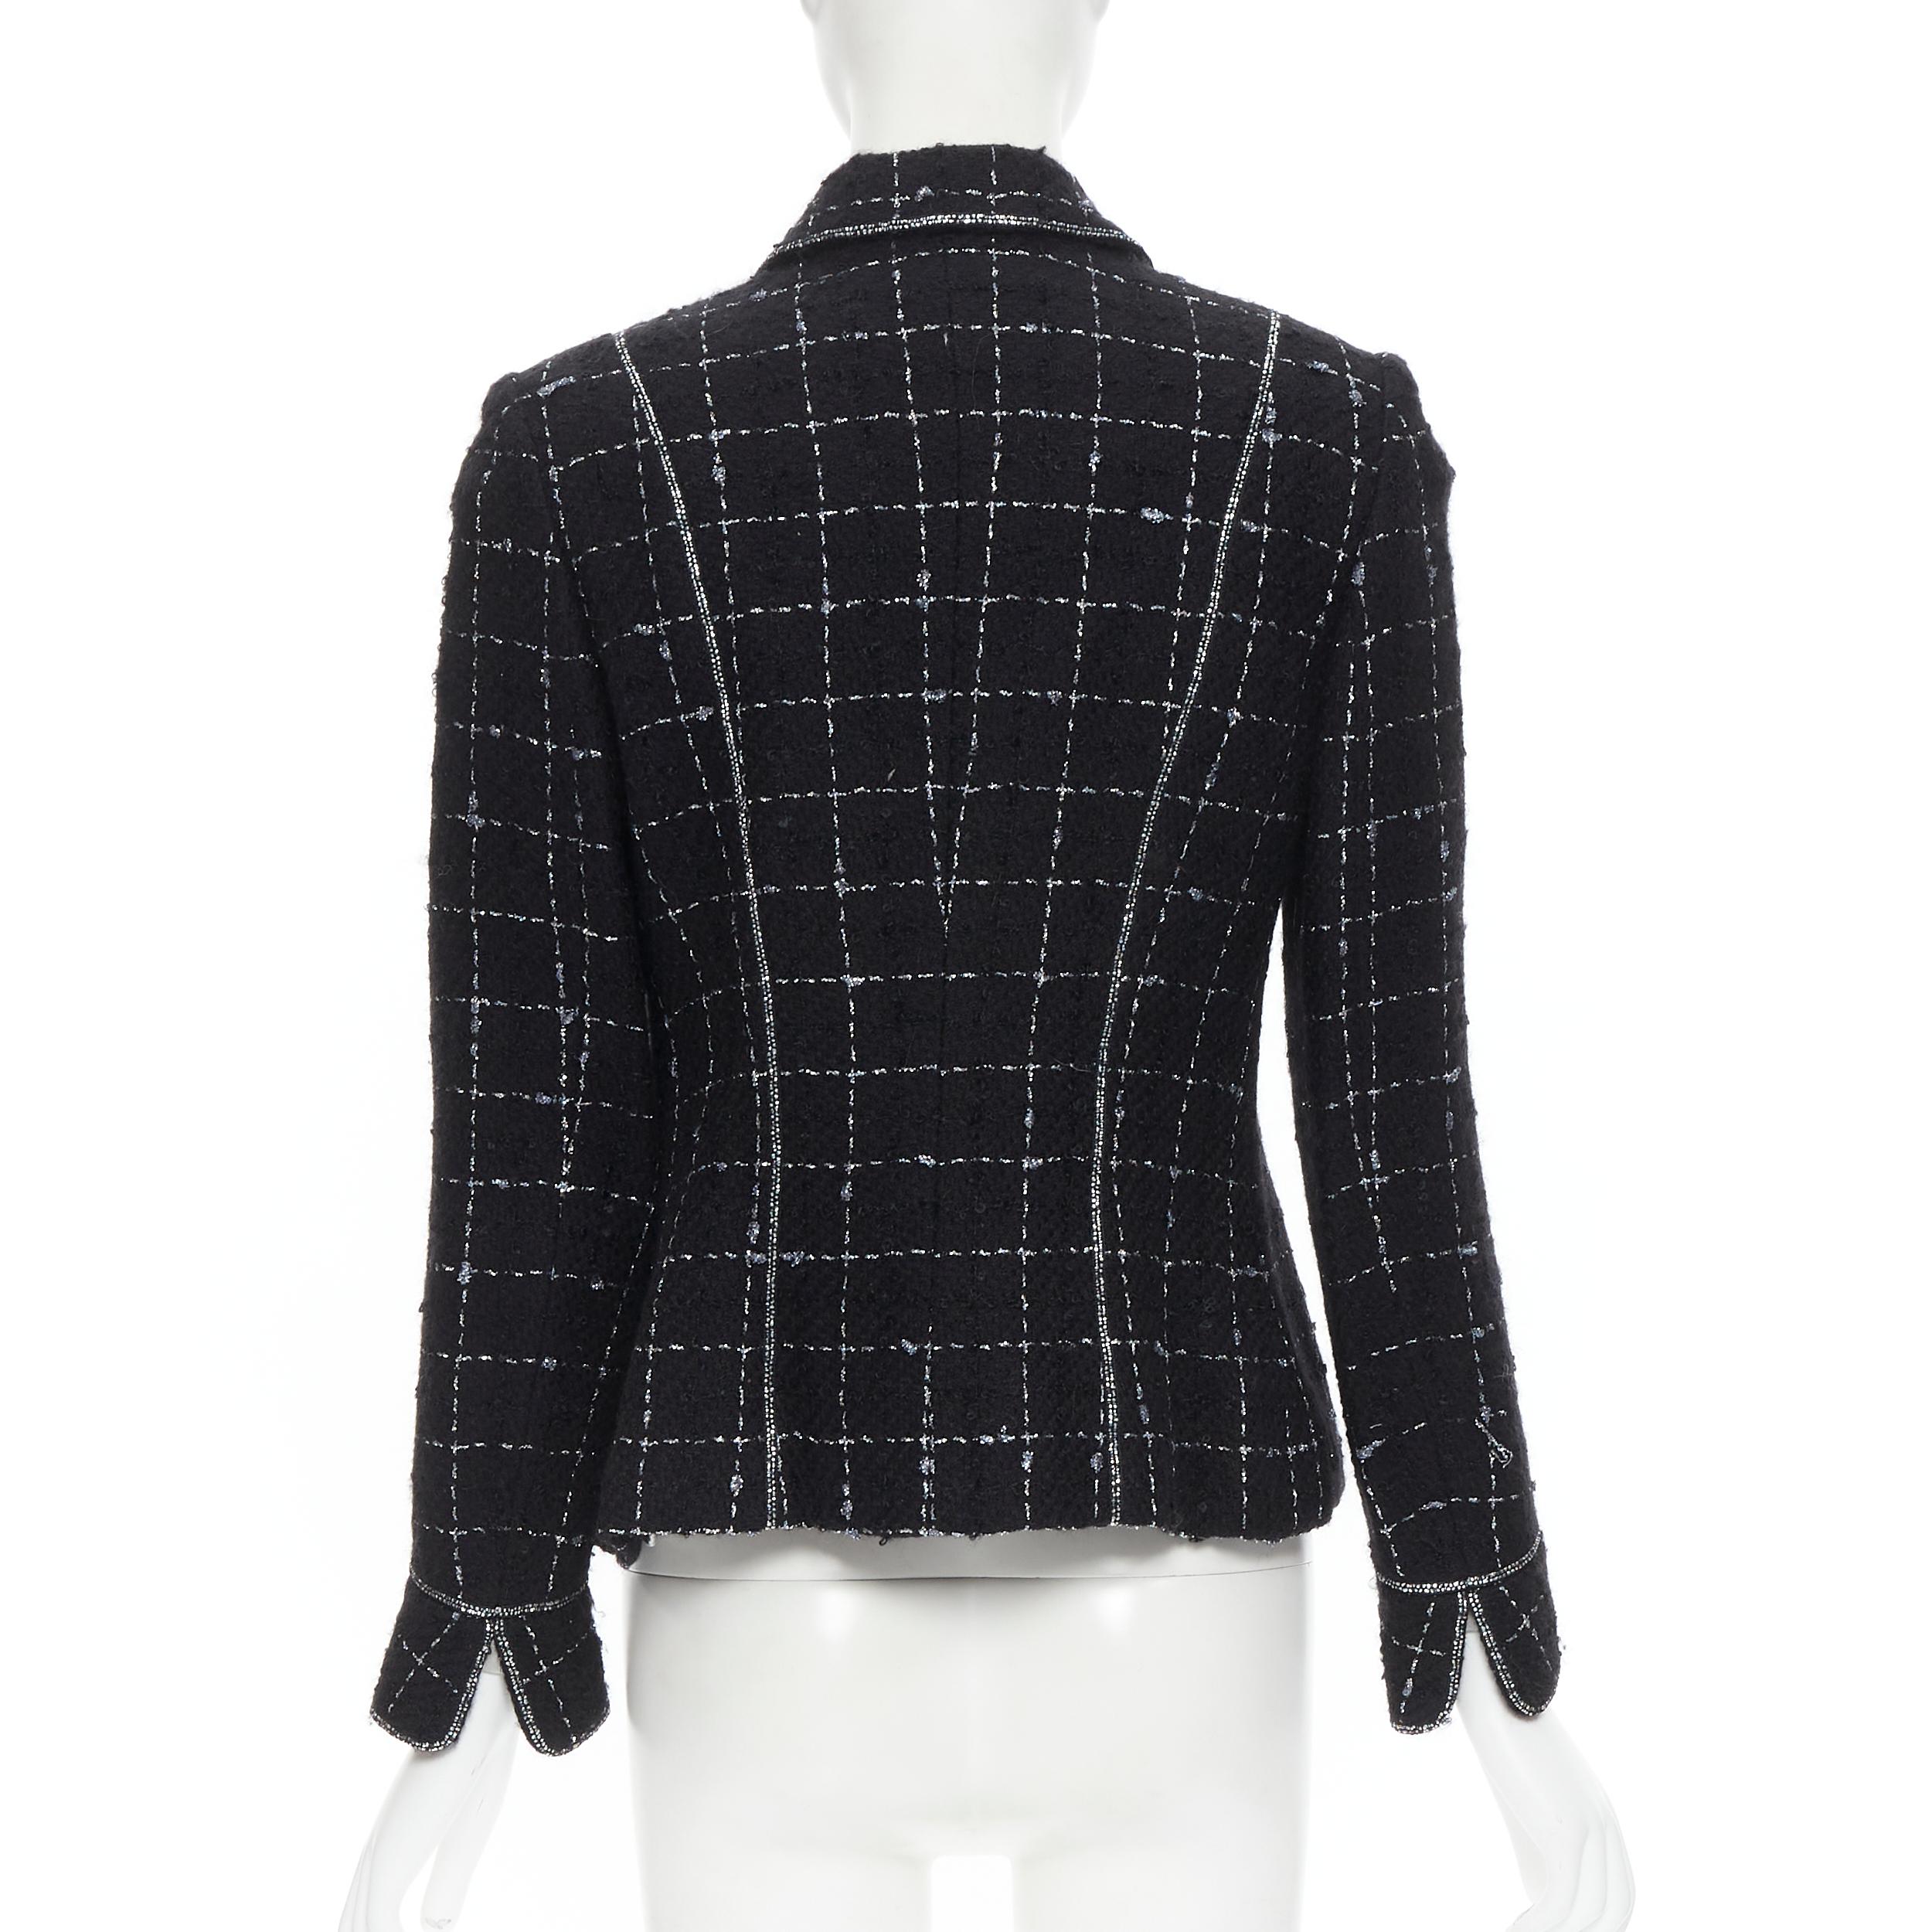 Black LUISA BECCARIA black silver check embellished tweed jacket skirt set IT44 M